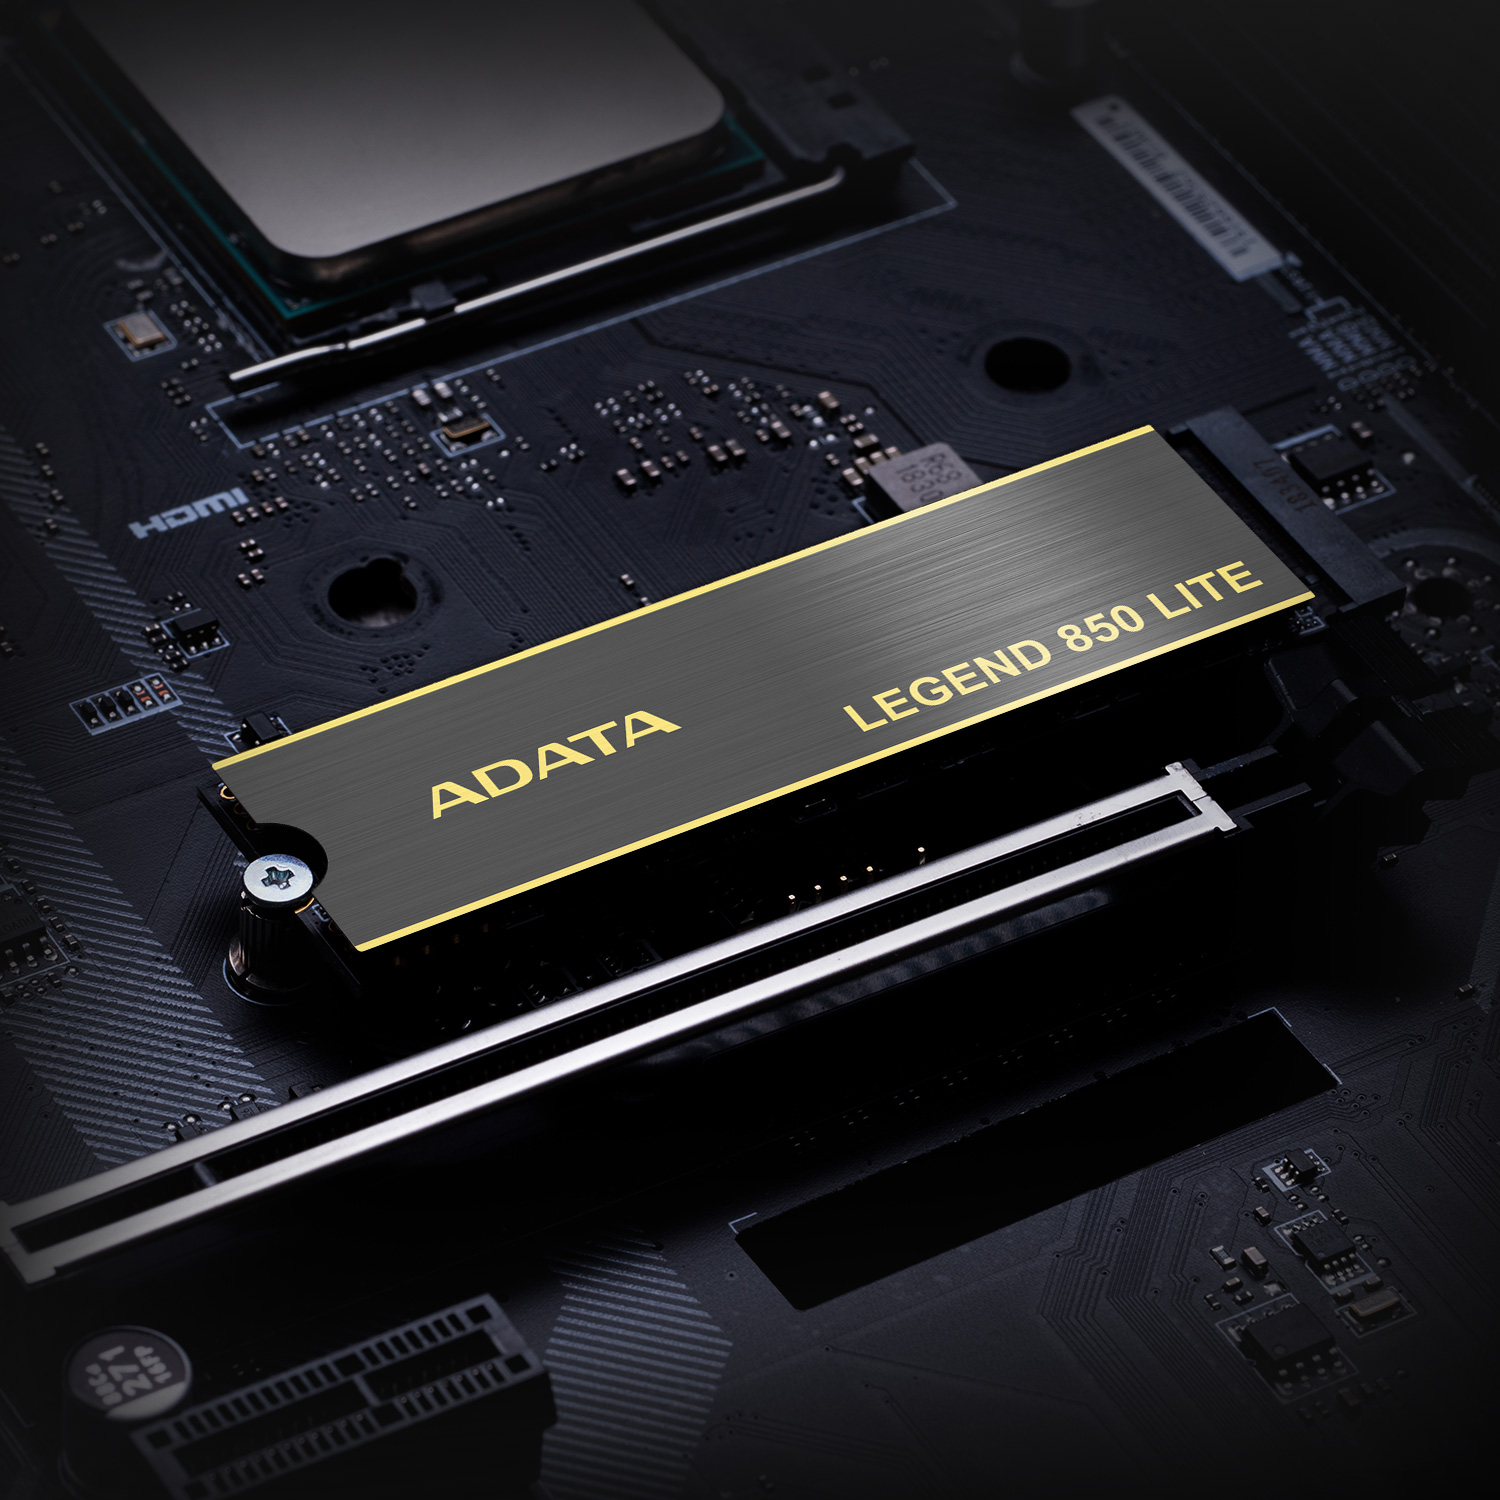 حافظه اس اس دی ADATA Legend 850 Lite 1TB - for PS5-7